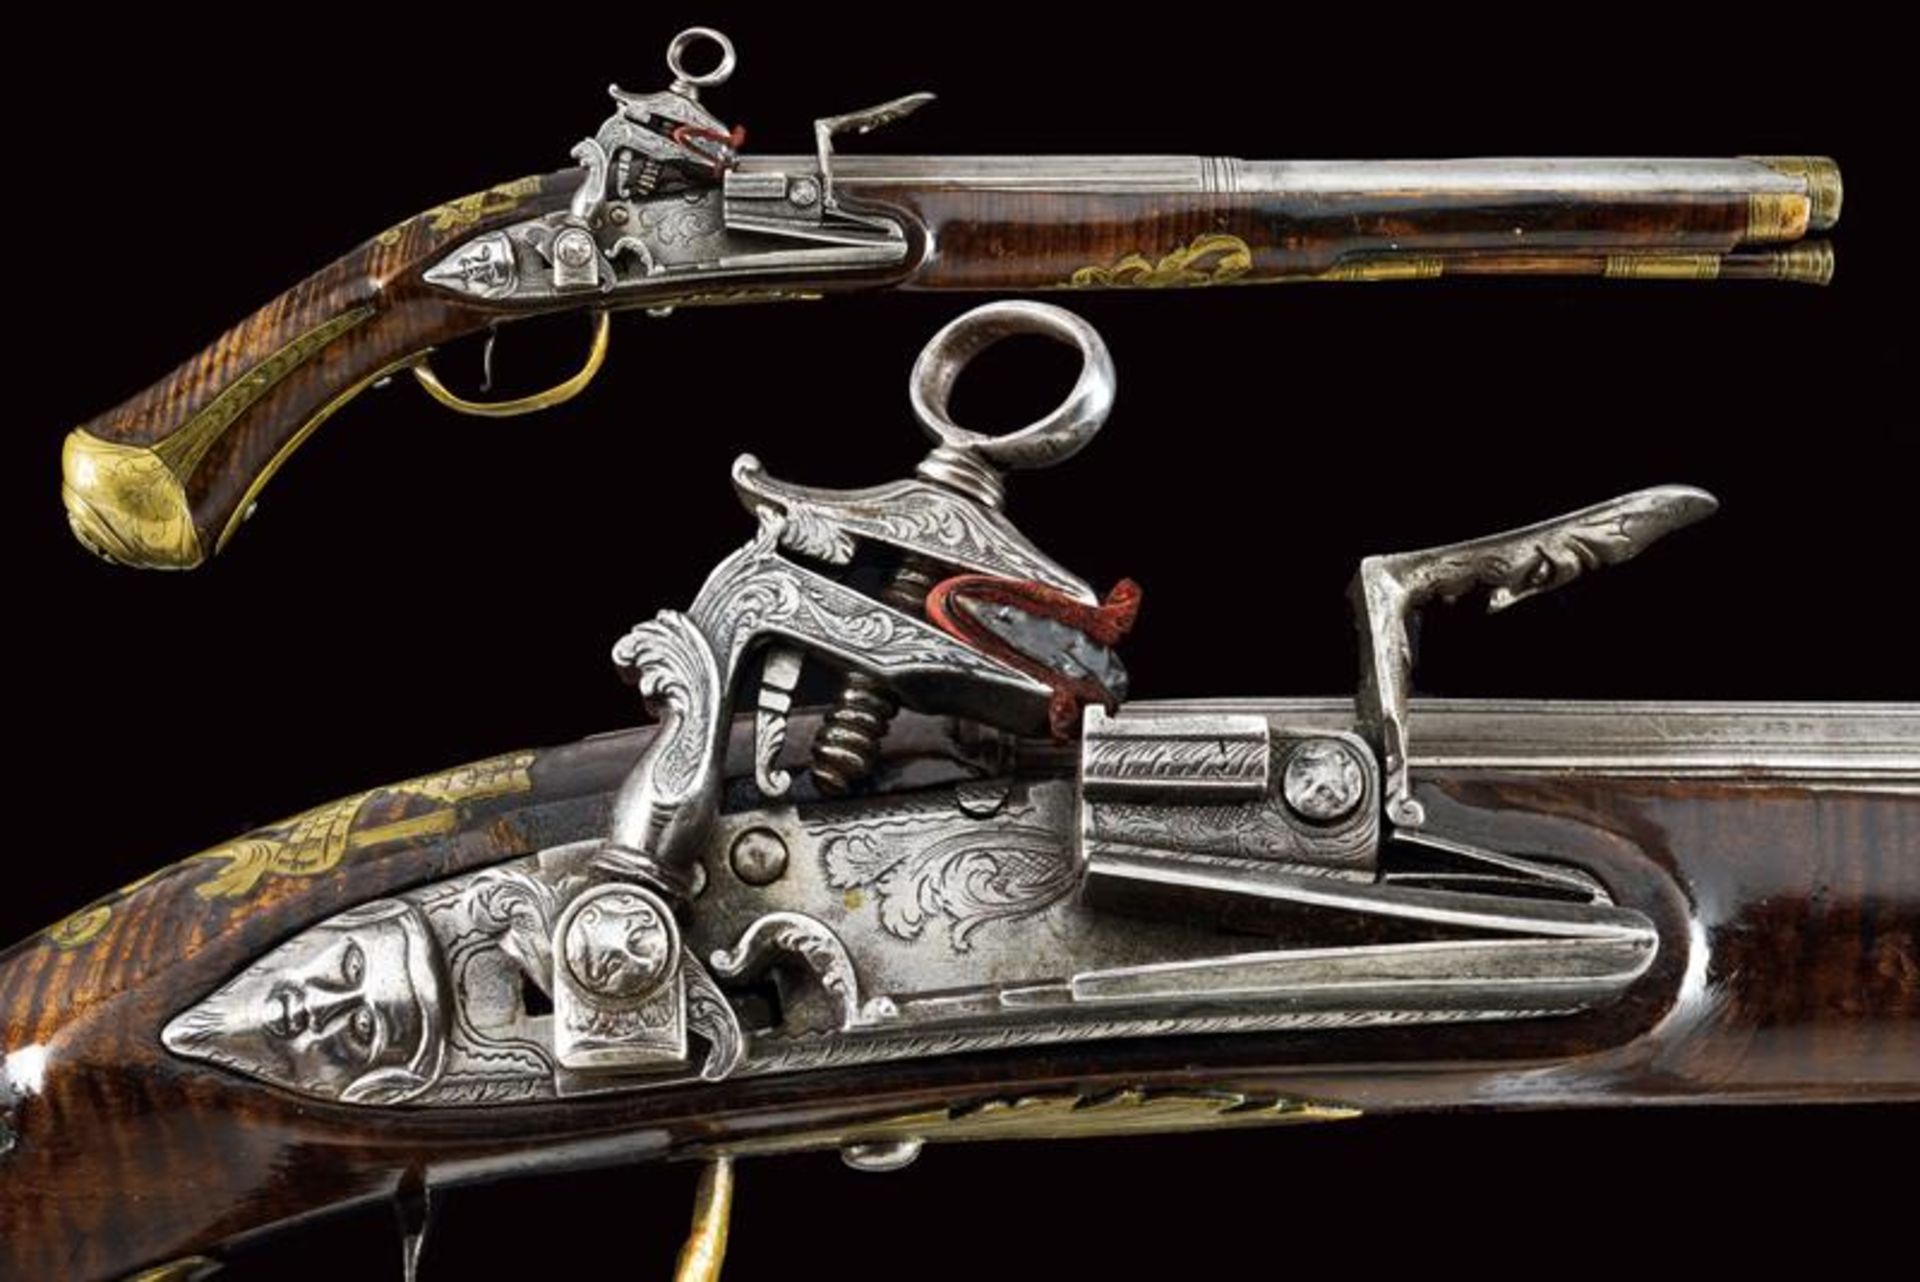 An elegant Roman-style flintlock pistol